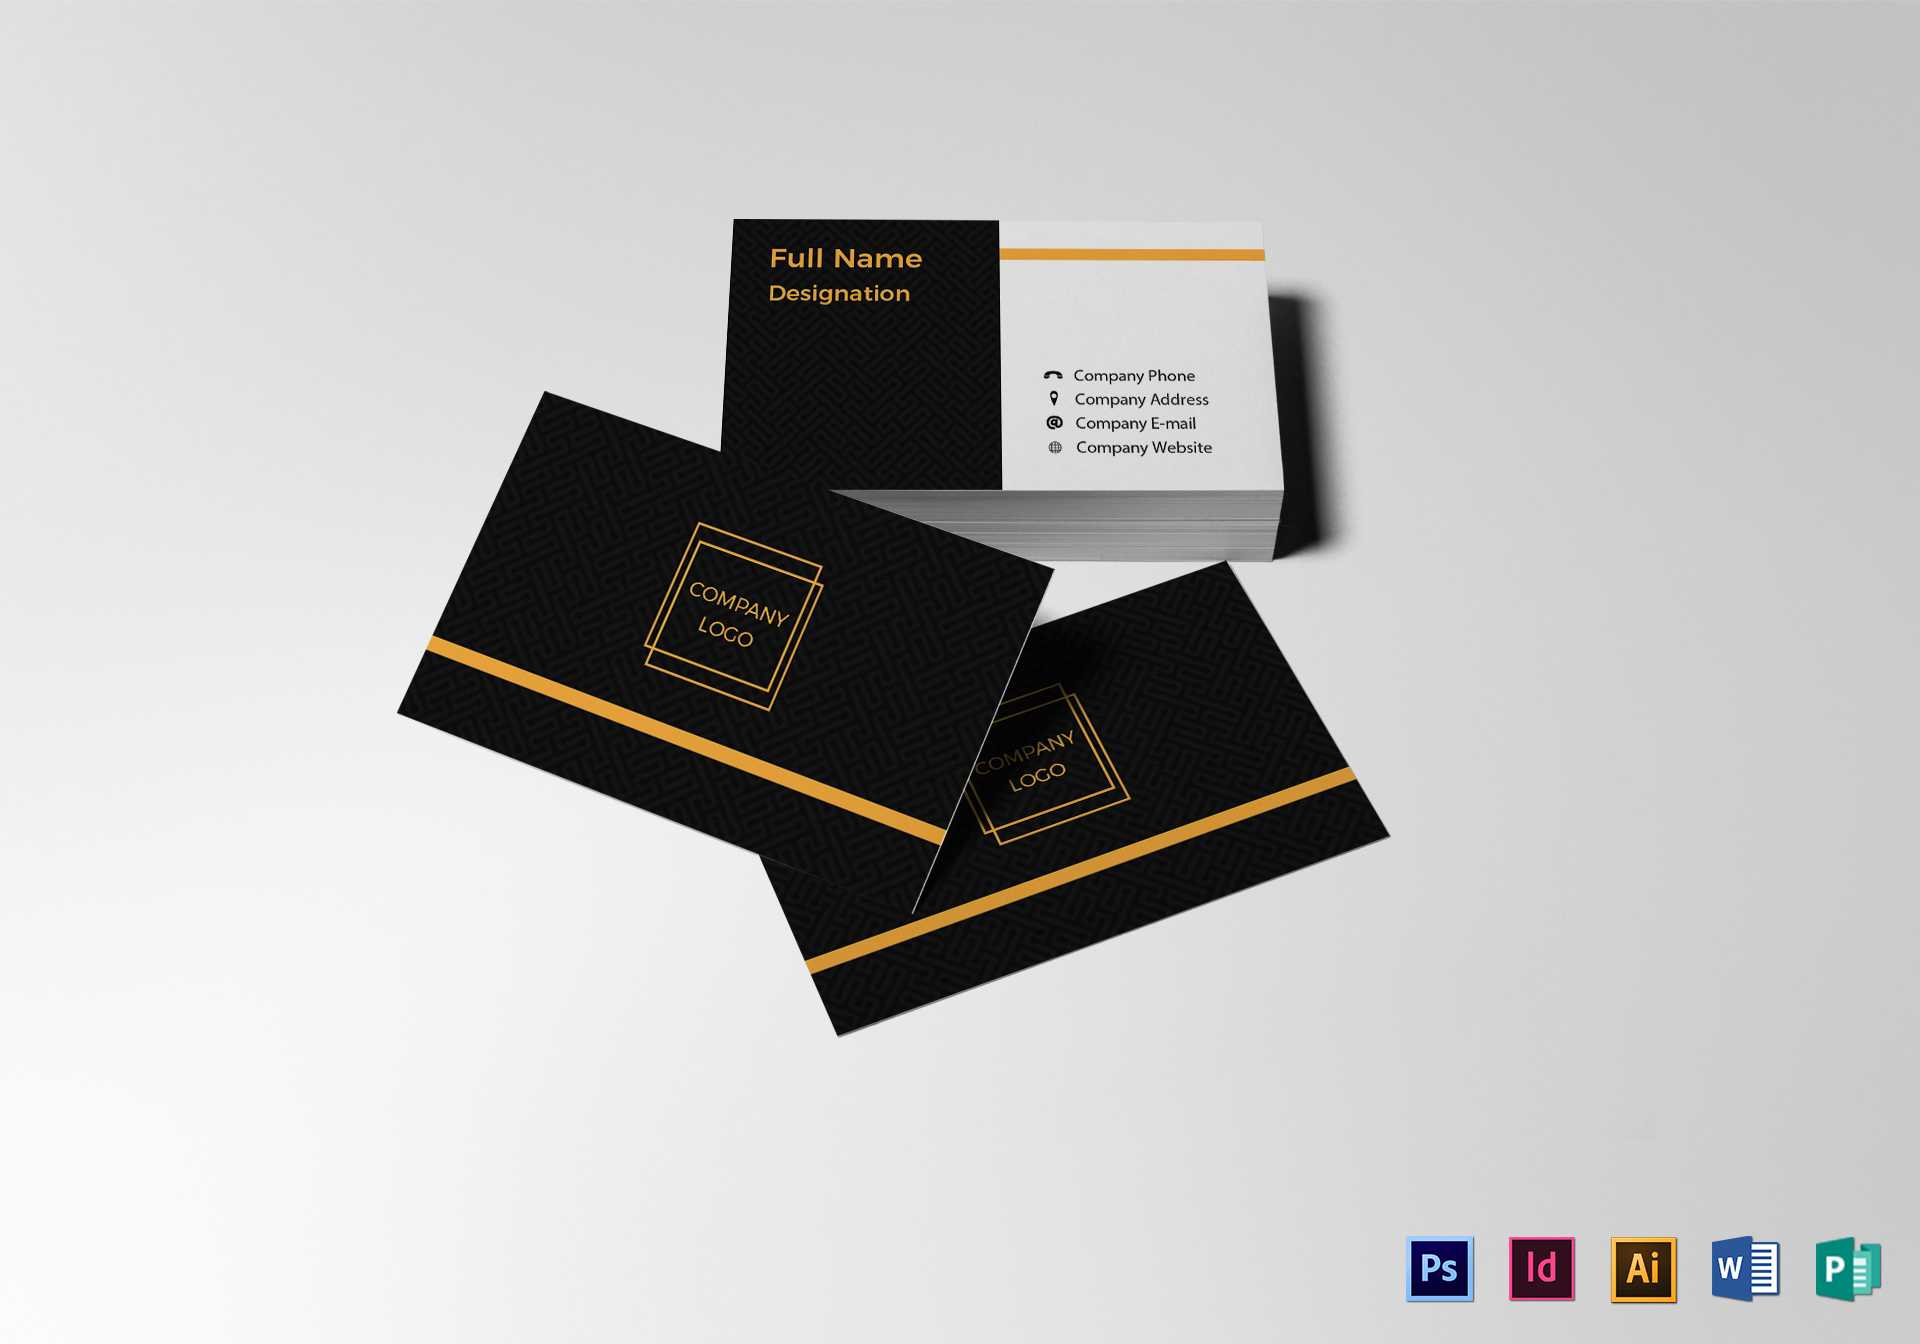 025 Blank Business Card Template Free Ideas Psd Photoshop Or Inside Blank Business Card Template Download